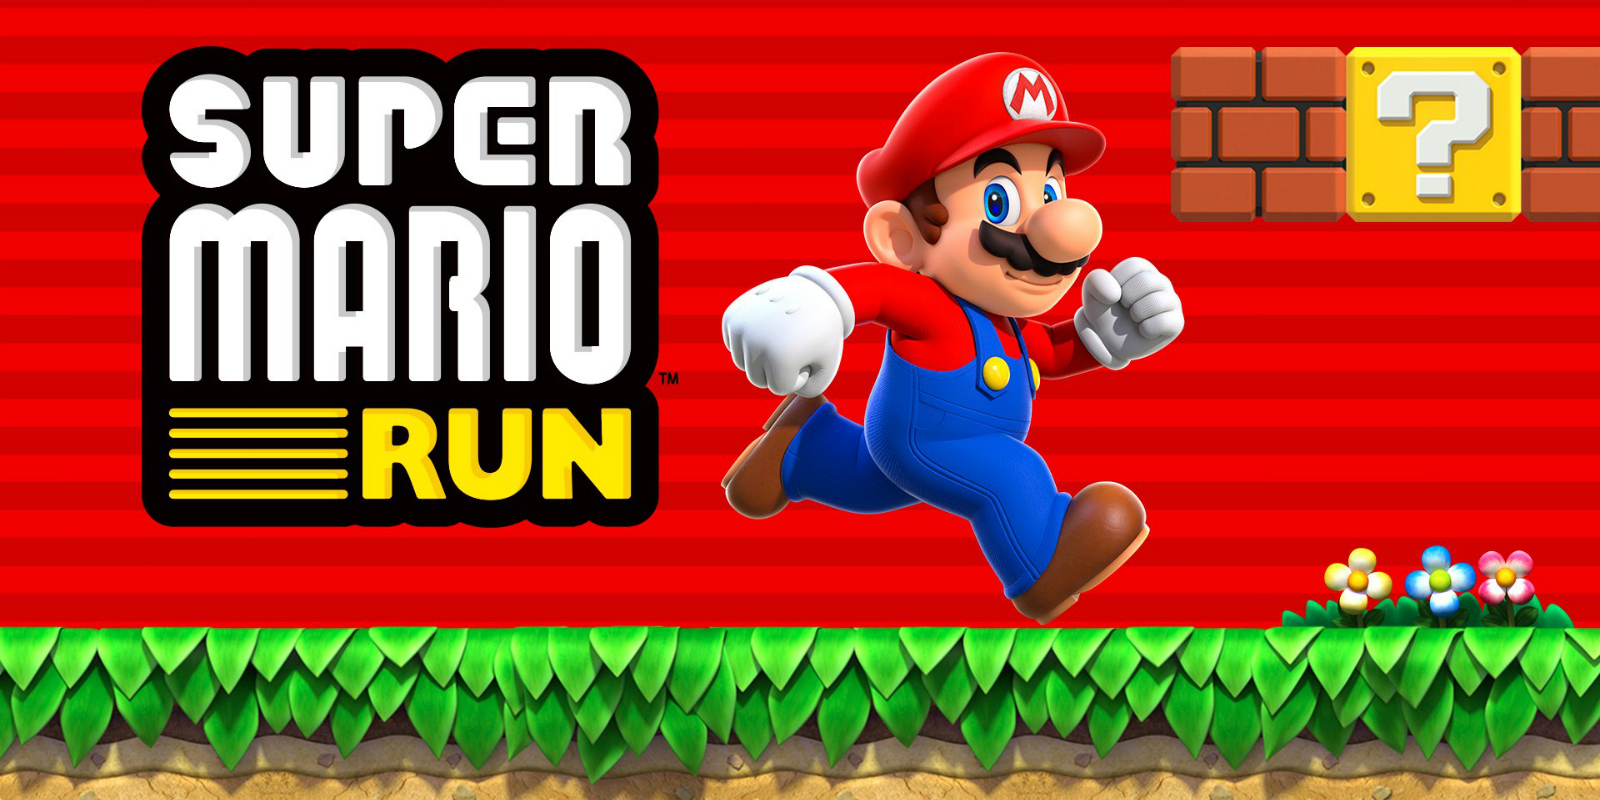 Super Mario Run mobile